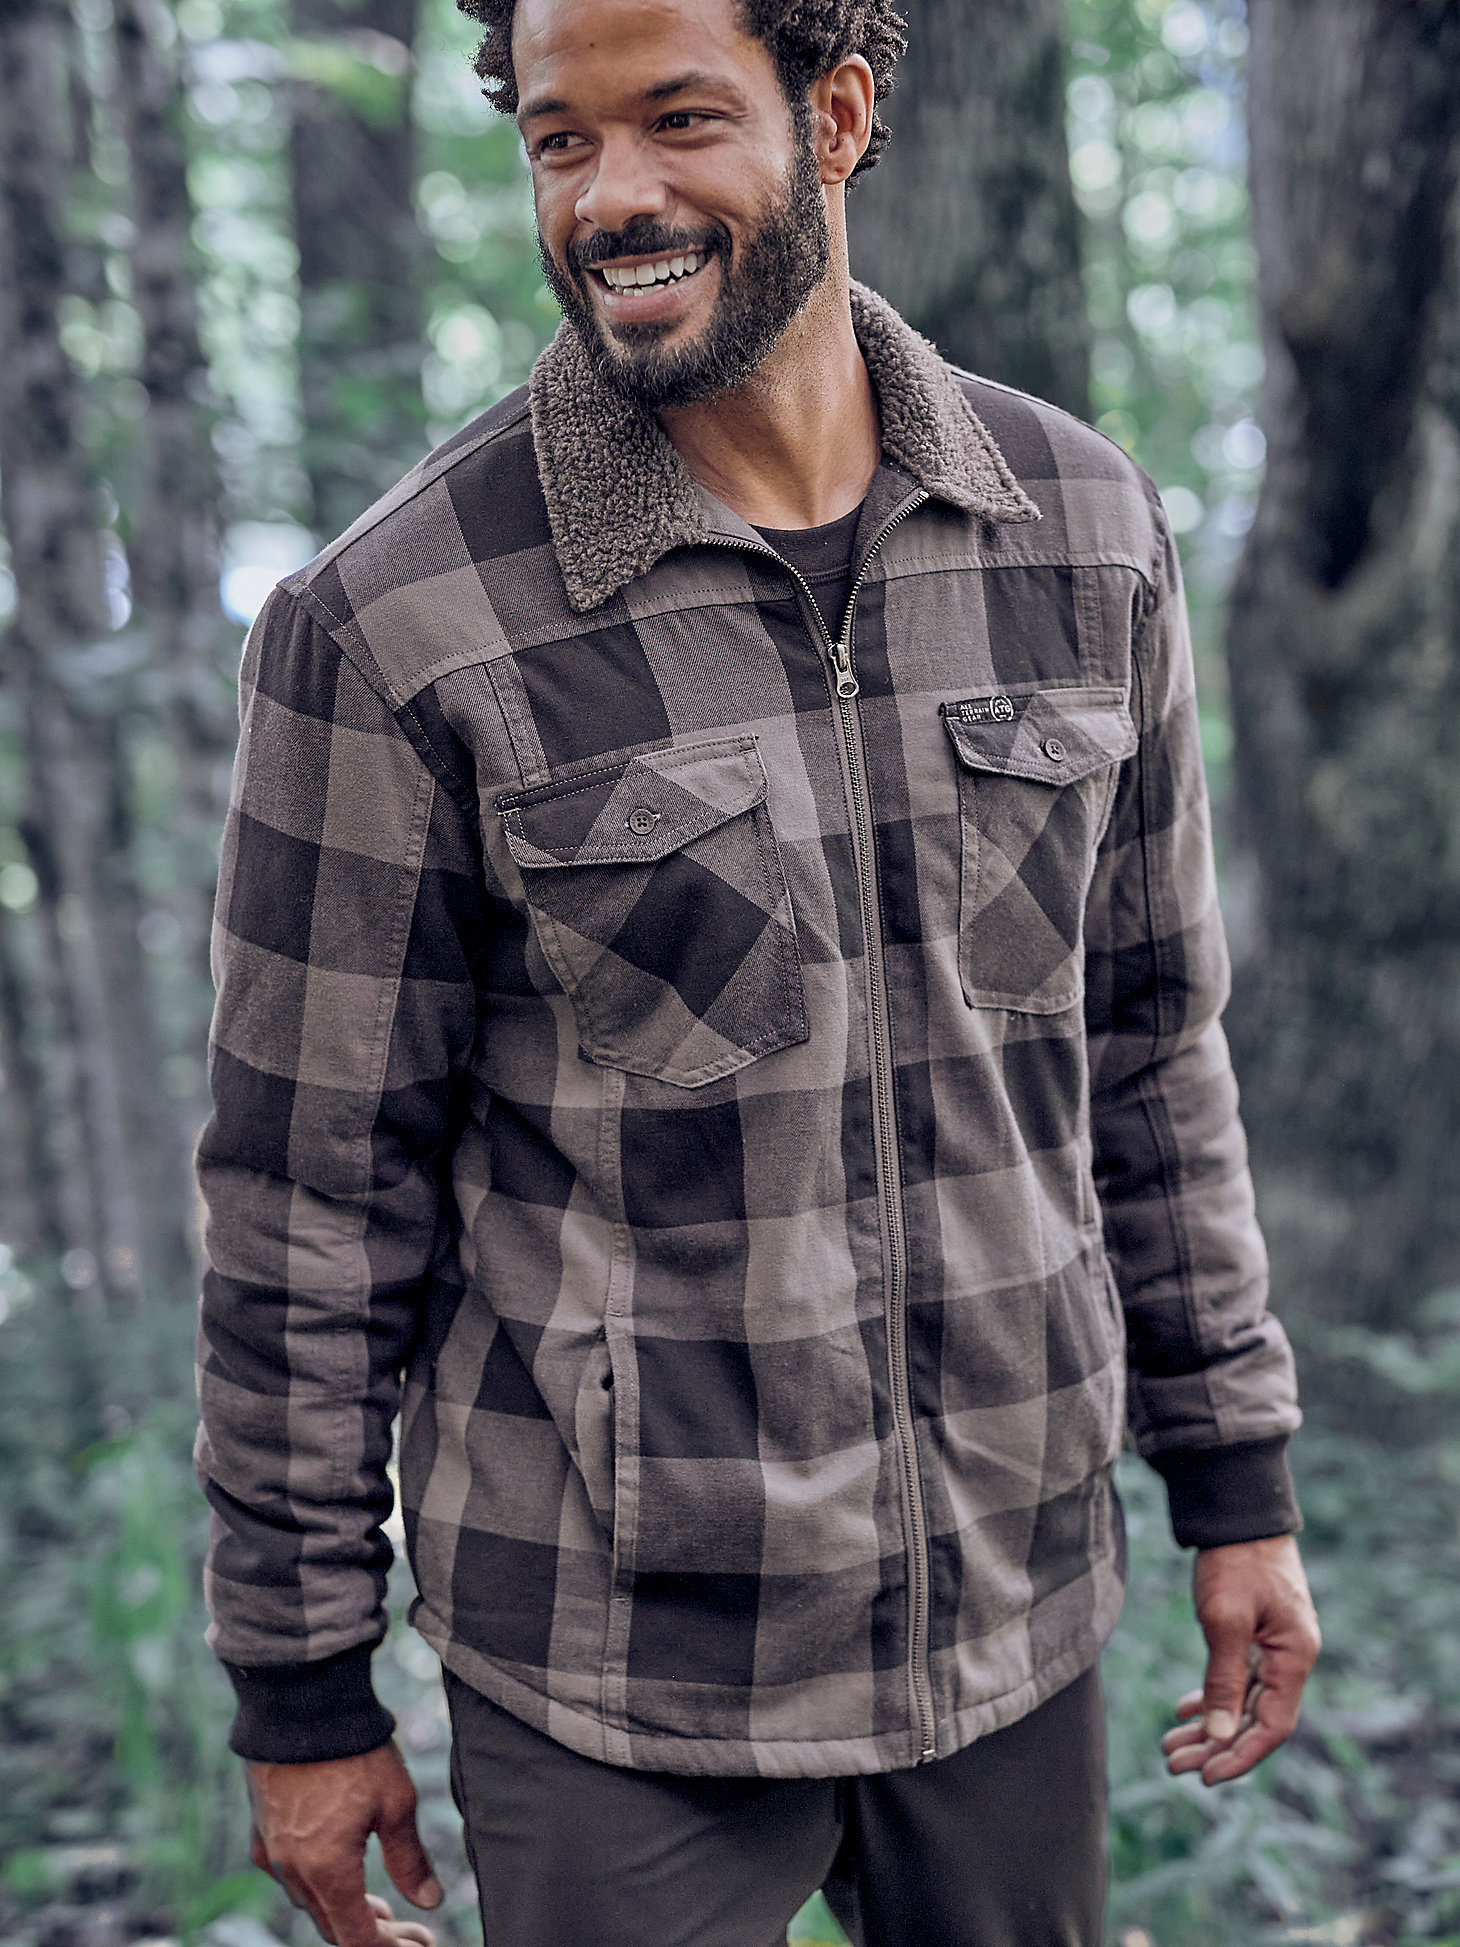 URG-KAP URG-Cape - Details about  / Work Shirt Thermal Shirt Winter Flannel Shirt Lumberjack Zip data-mtsrclang=en-US href=# onclick=return false; 							show original title